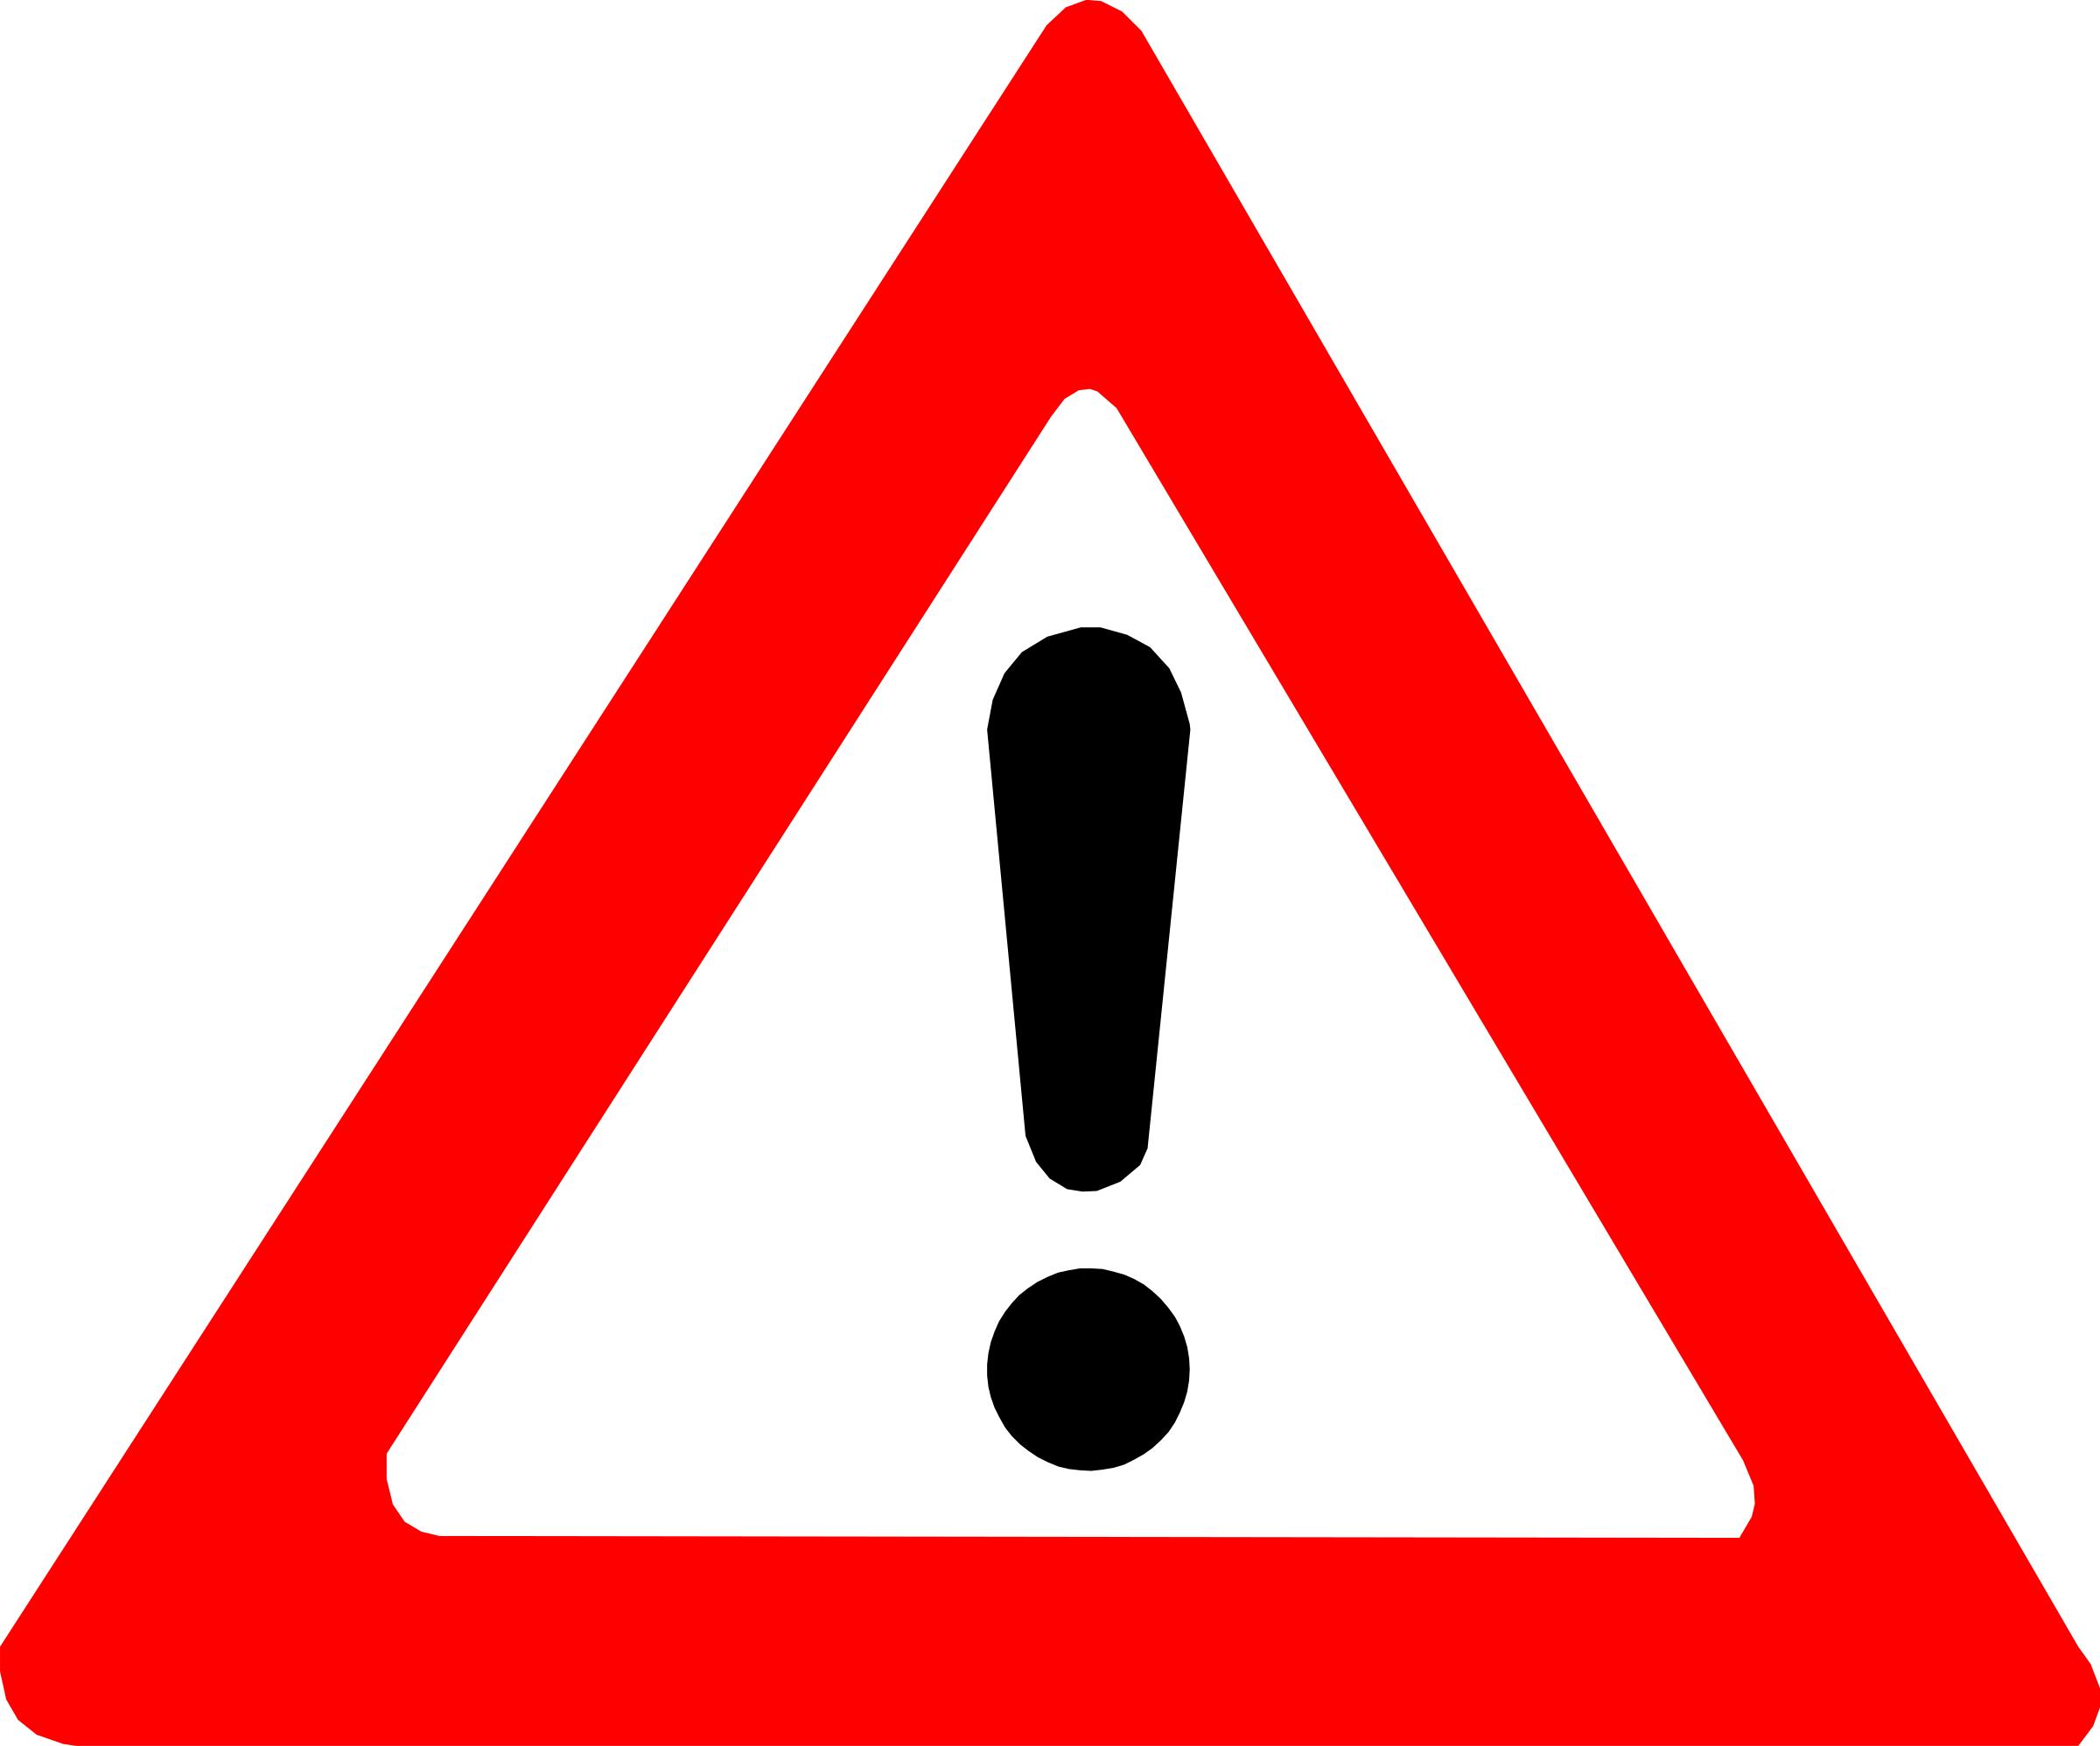 Warning Sign PNG icons